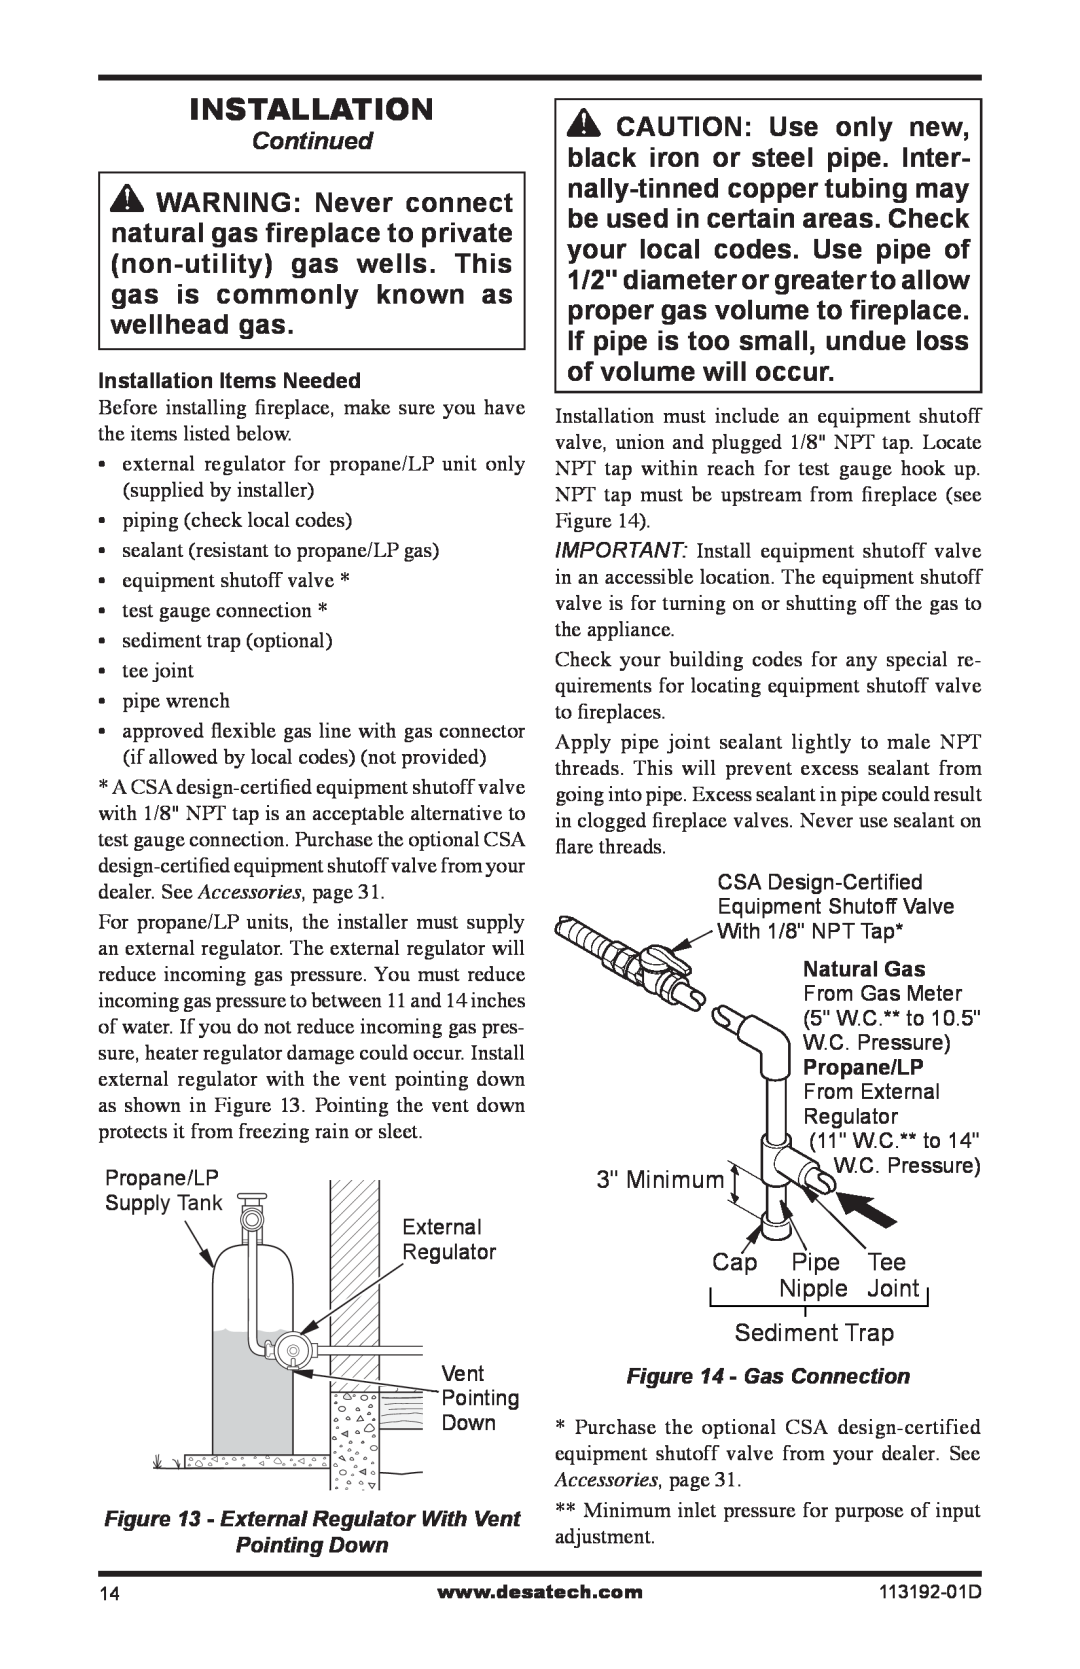 Desa VSGF36NR, VSGF36PR installation manual Continued, Minimum, Cap Pipe, Nipple, Joint, Sediment Trap, Gas Connection 